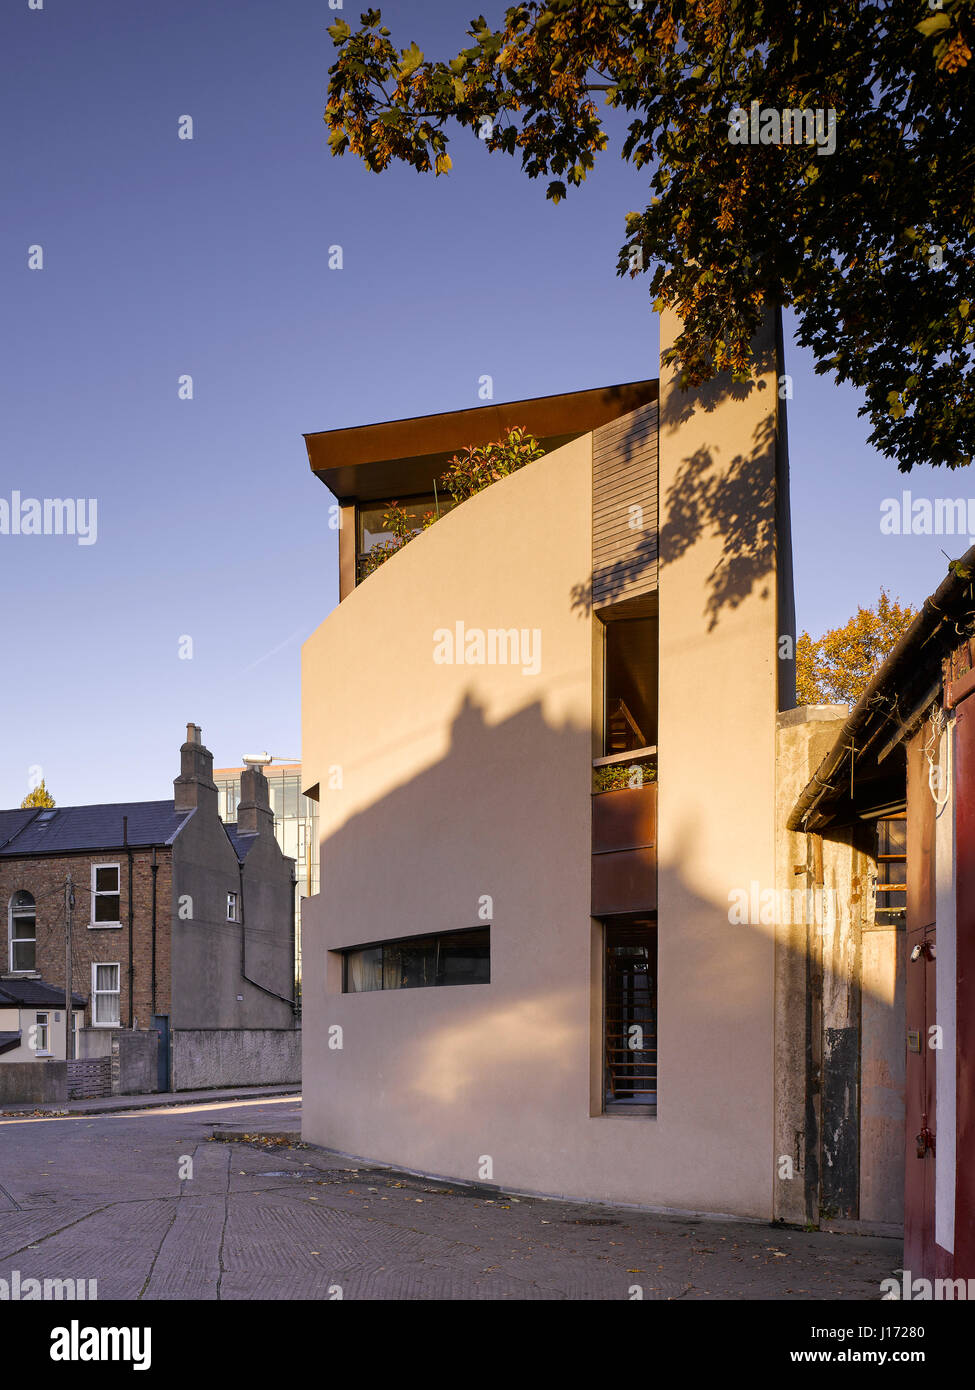 Exterior facade shown from street. K House, Ranelagh, Ireland. Architect: Architects Tom Maher, 2016. Stock Photo